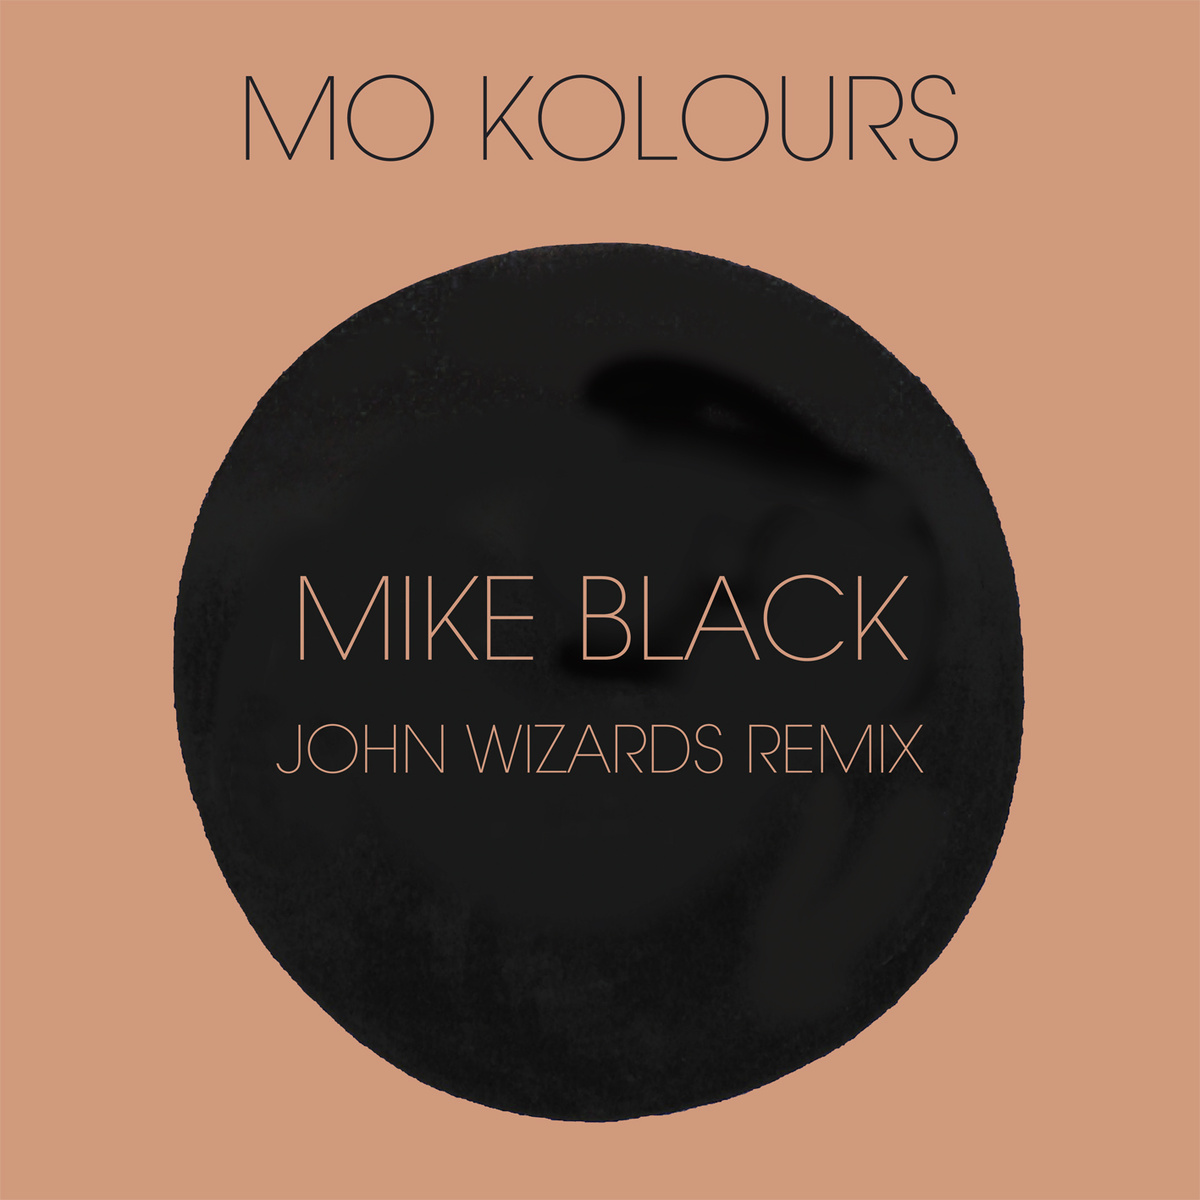 Mo Kolours - "Mike Black" (John Wizards Remix)